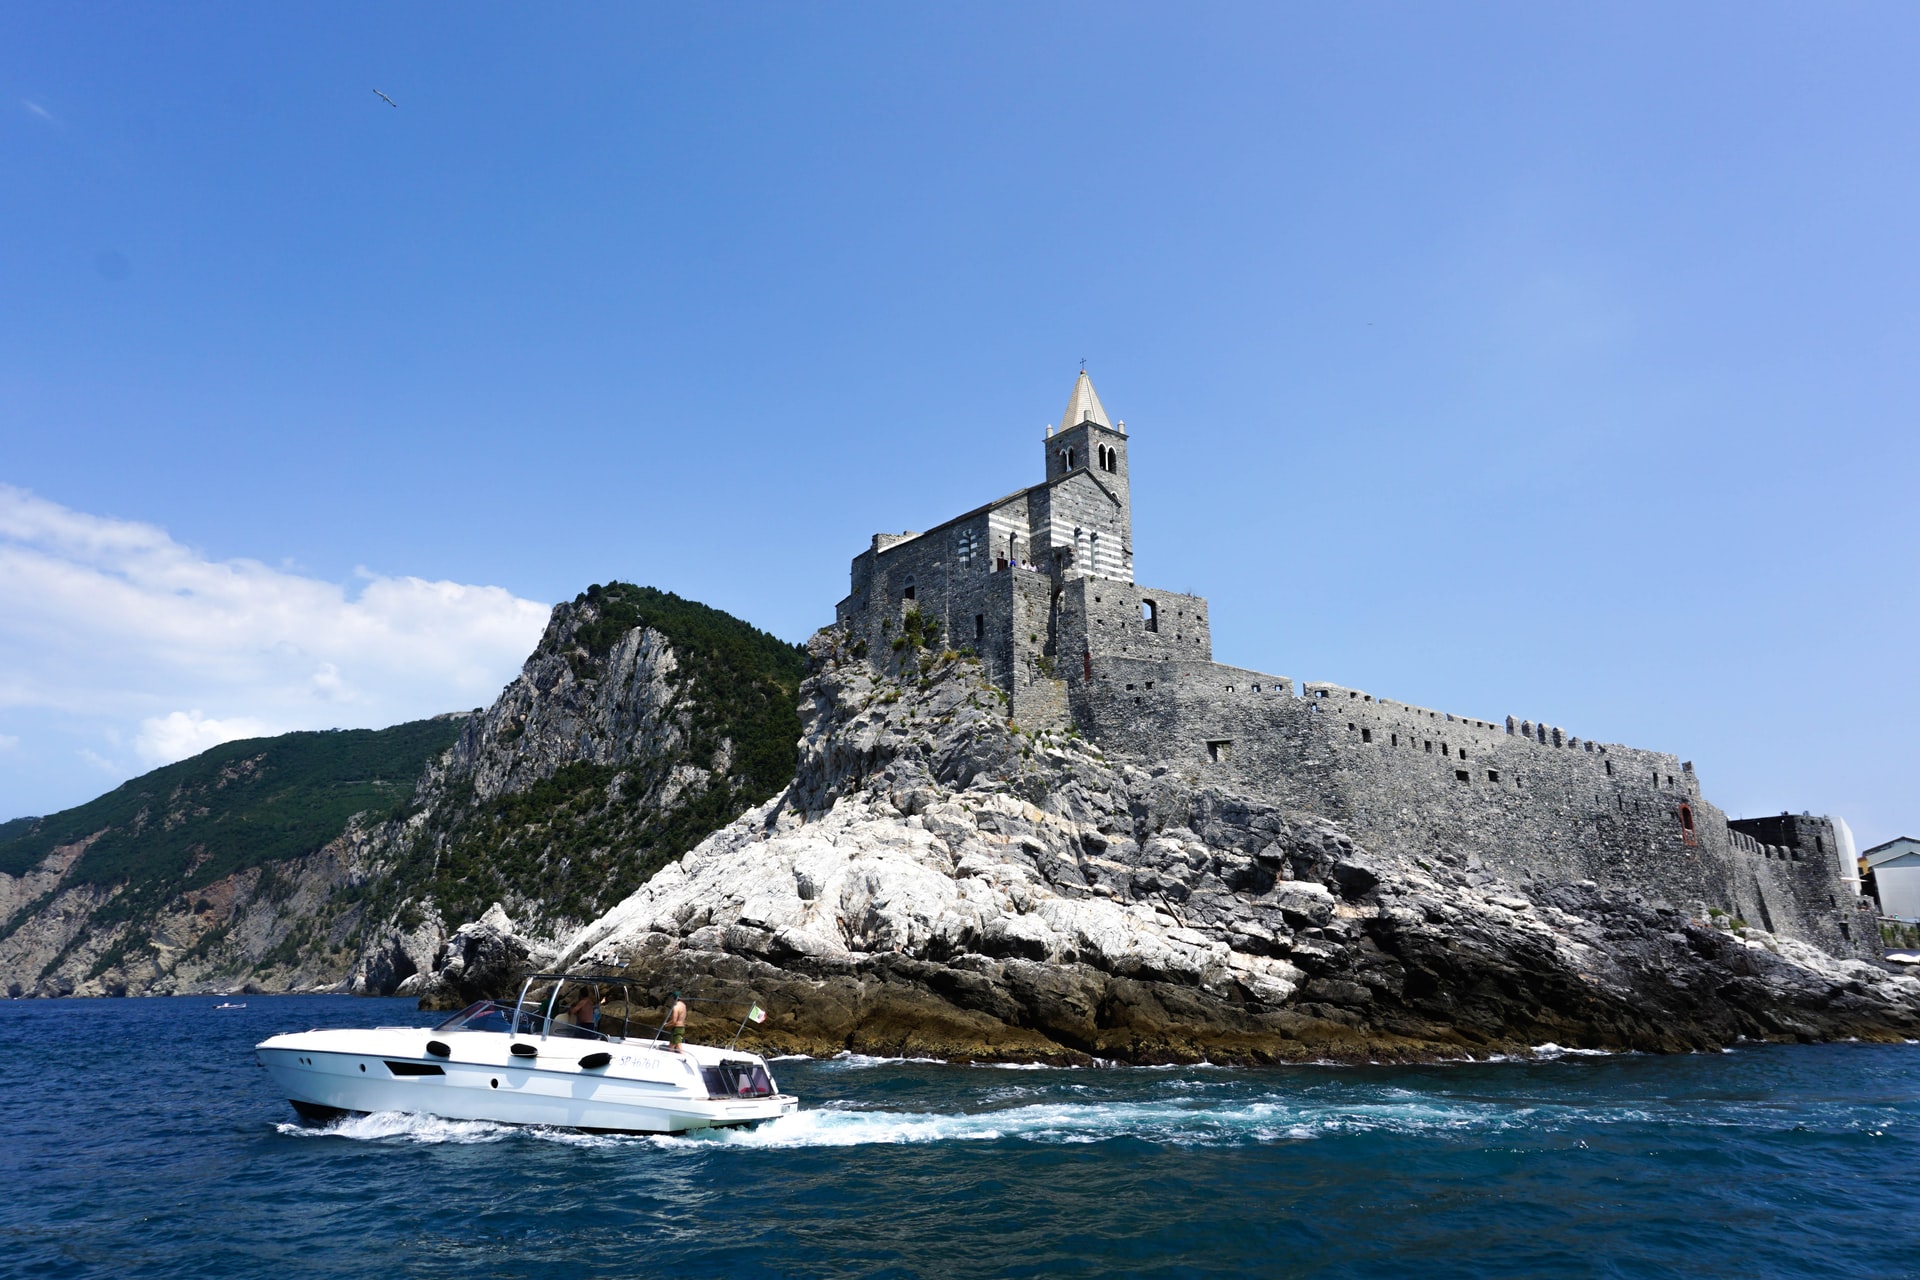 Is Cinque Terre worth the visit?